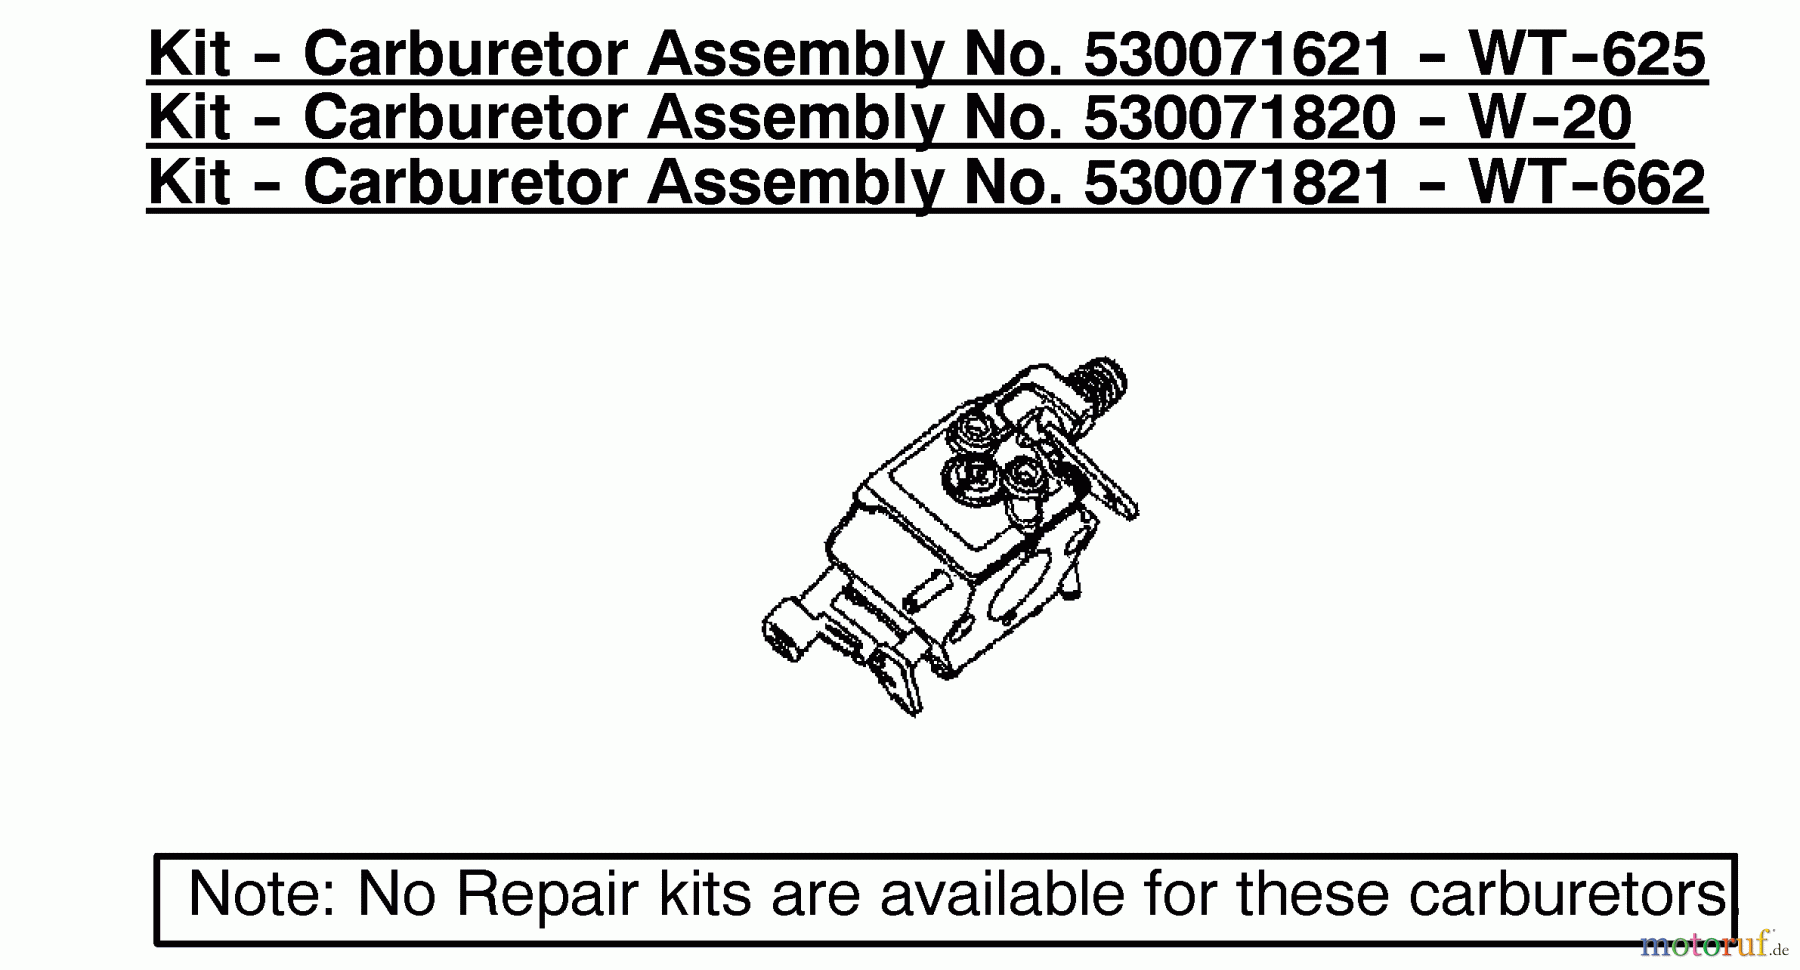  Poulan / Weed Eater Motorsägen 2250 (Type 7) - Poulan Woodmaster Chainsaw Kit - Carburetor Assembly 530071621/530071820/530071821